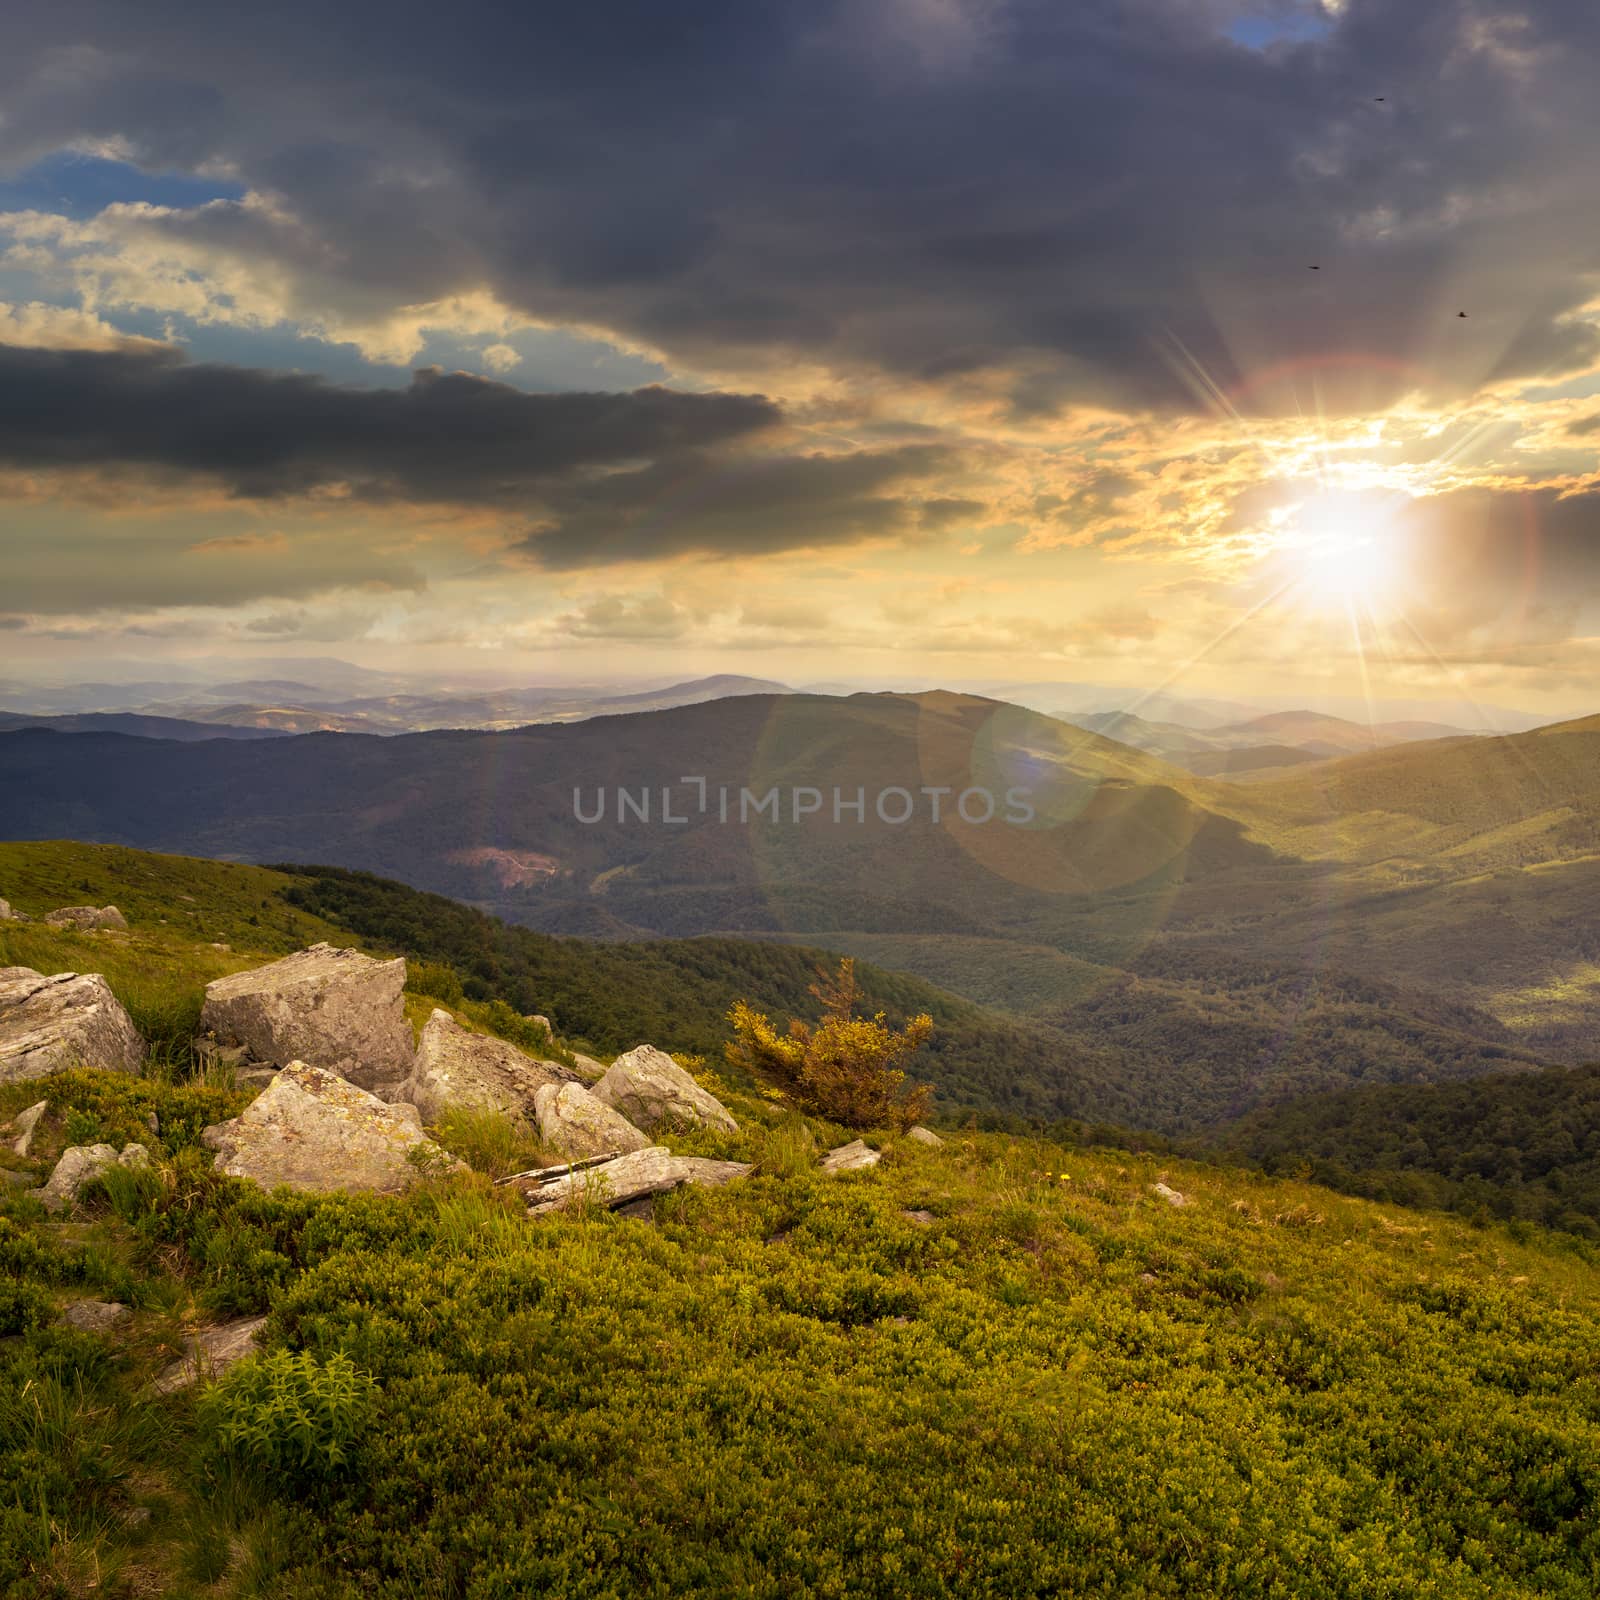 white sharp stones on the hillside of high mountains at sunset